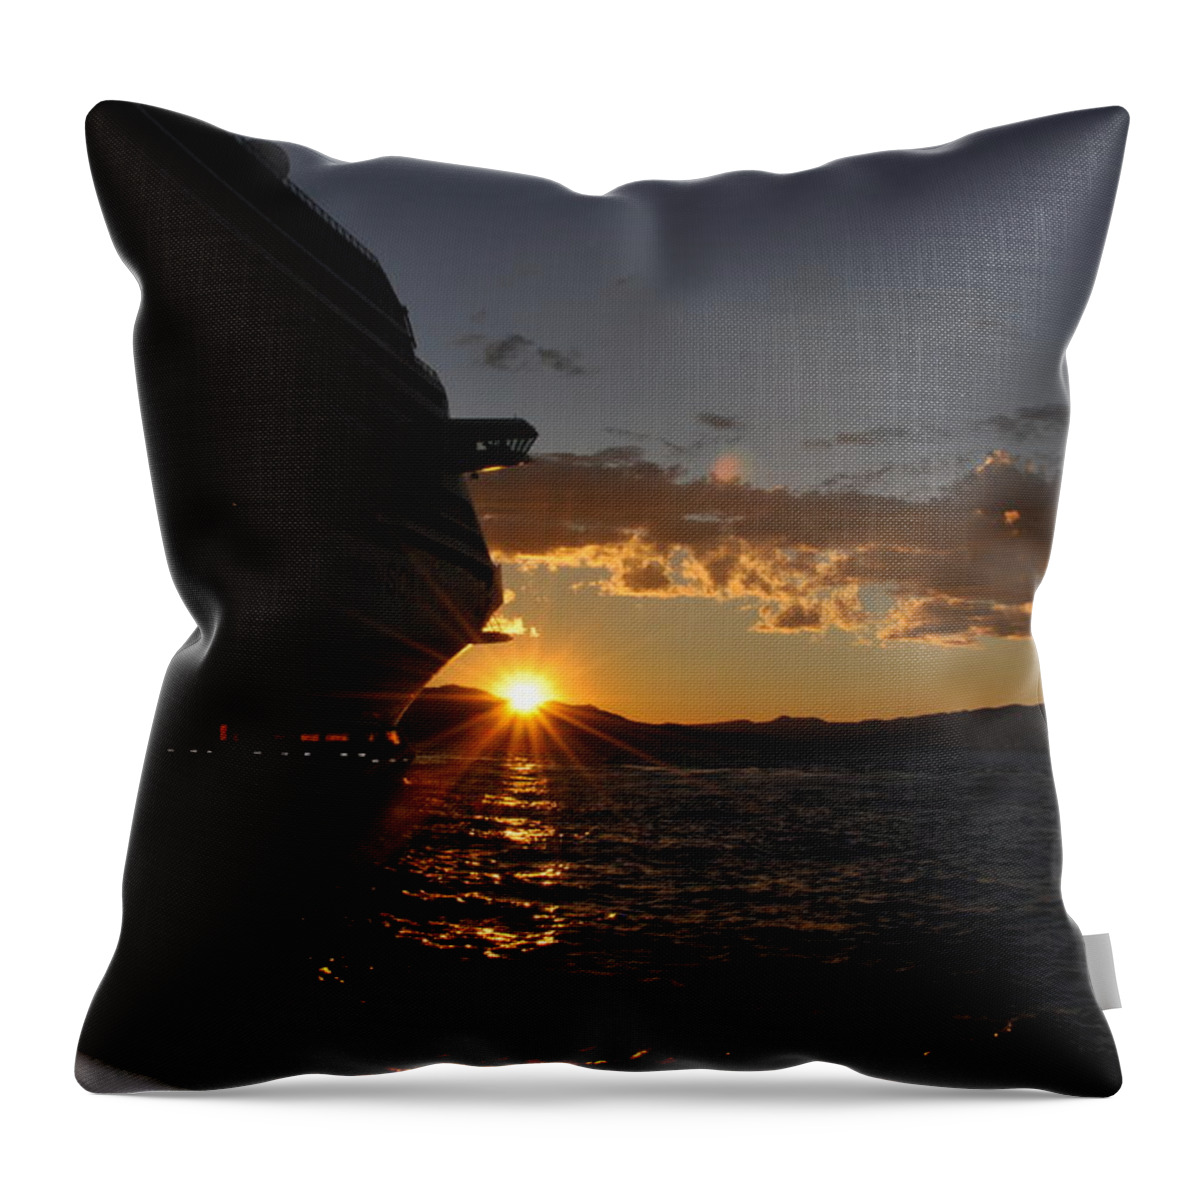 #celebrity Cruise Line Throw Pillow featuring the photograph Mediterranean Sunset by Cornelia DeDona